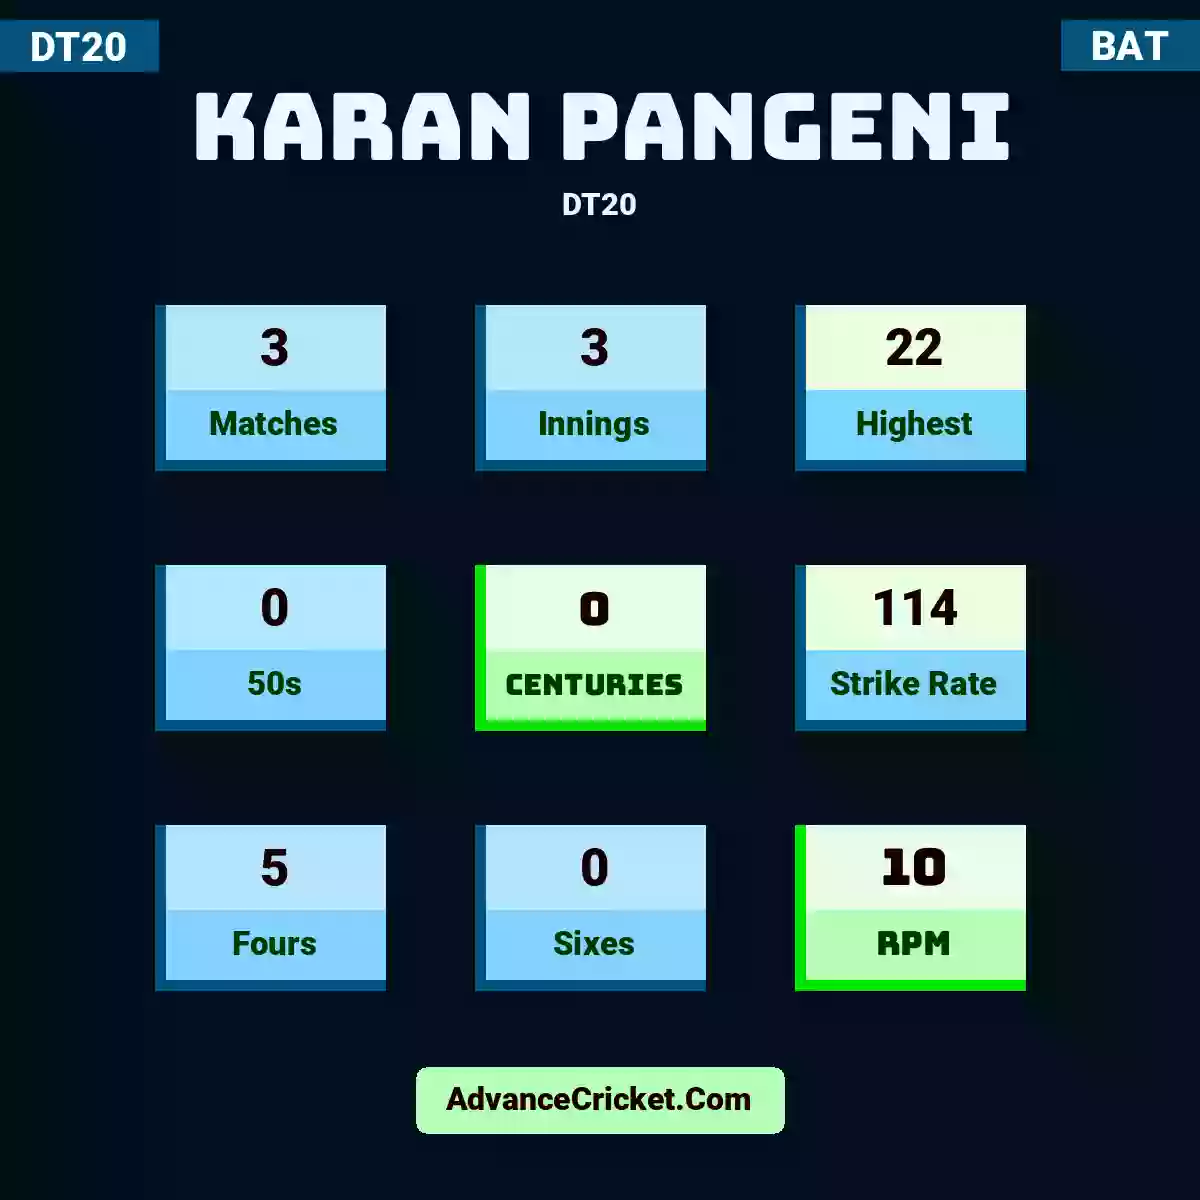 Karan Pangeni DT20 , Karan Pangeni played 3 matches, scored 22 runs as highest, 0 half-centuries, and 0 centuries, with a strike rate of 114. K.Pangeni hit 5 fours and 0 sixes, with an RPM of 10.